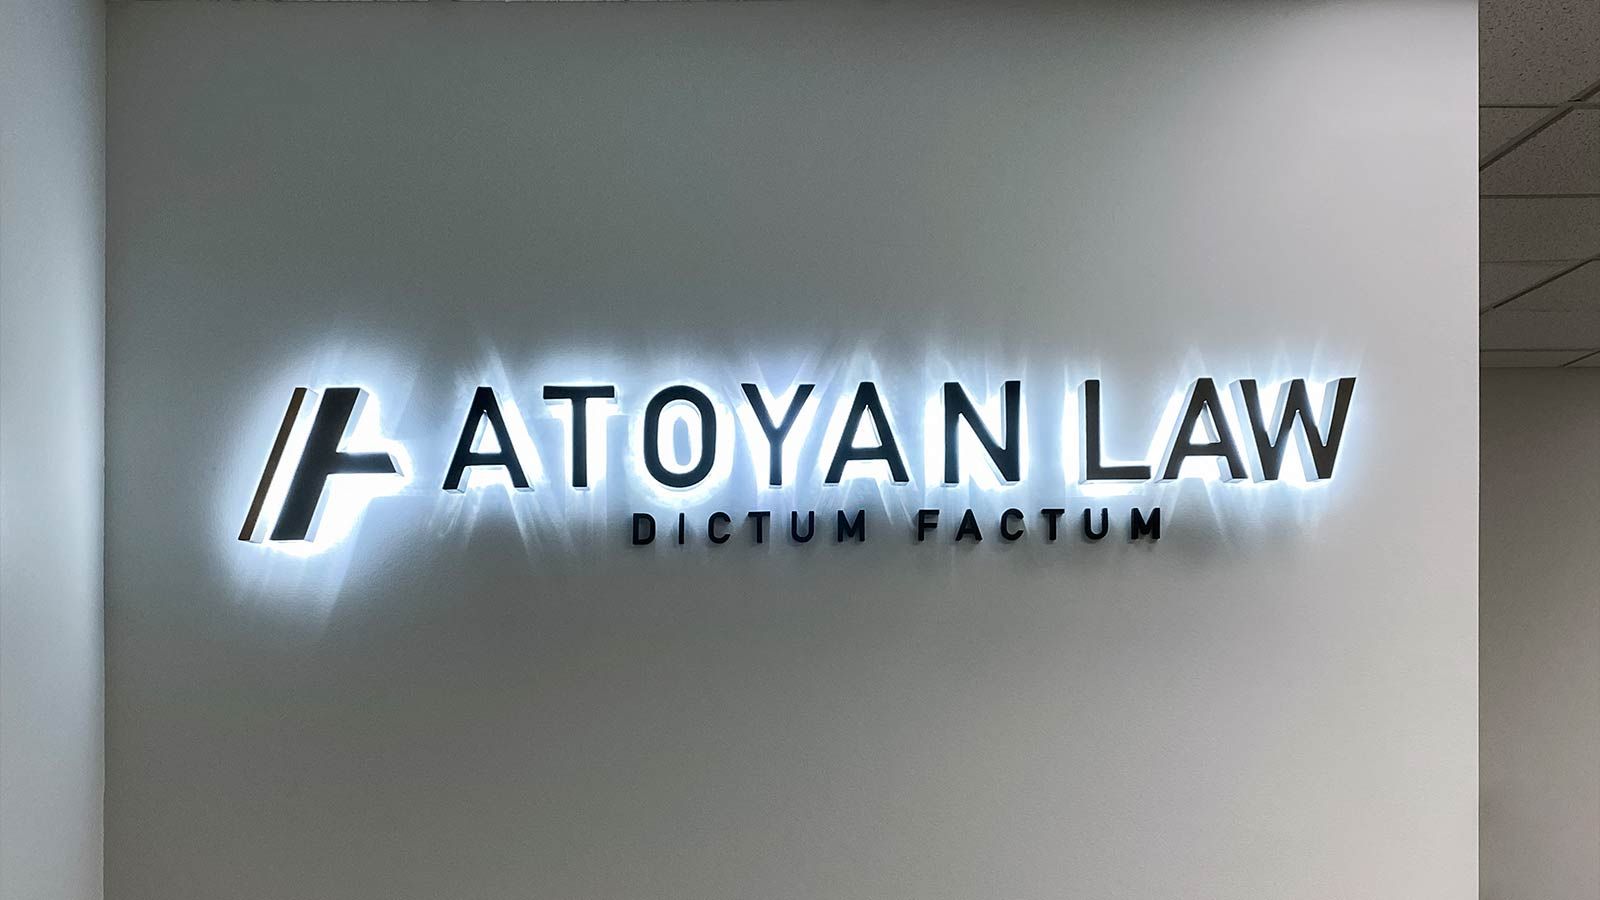 Atoyan Law backlit letters